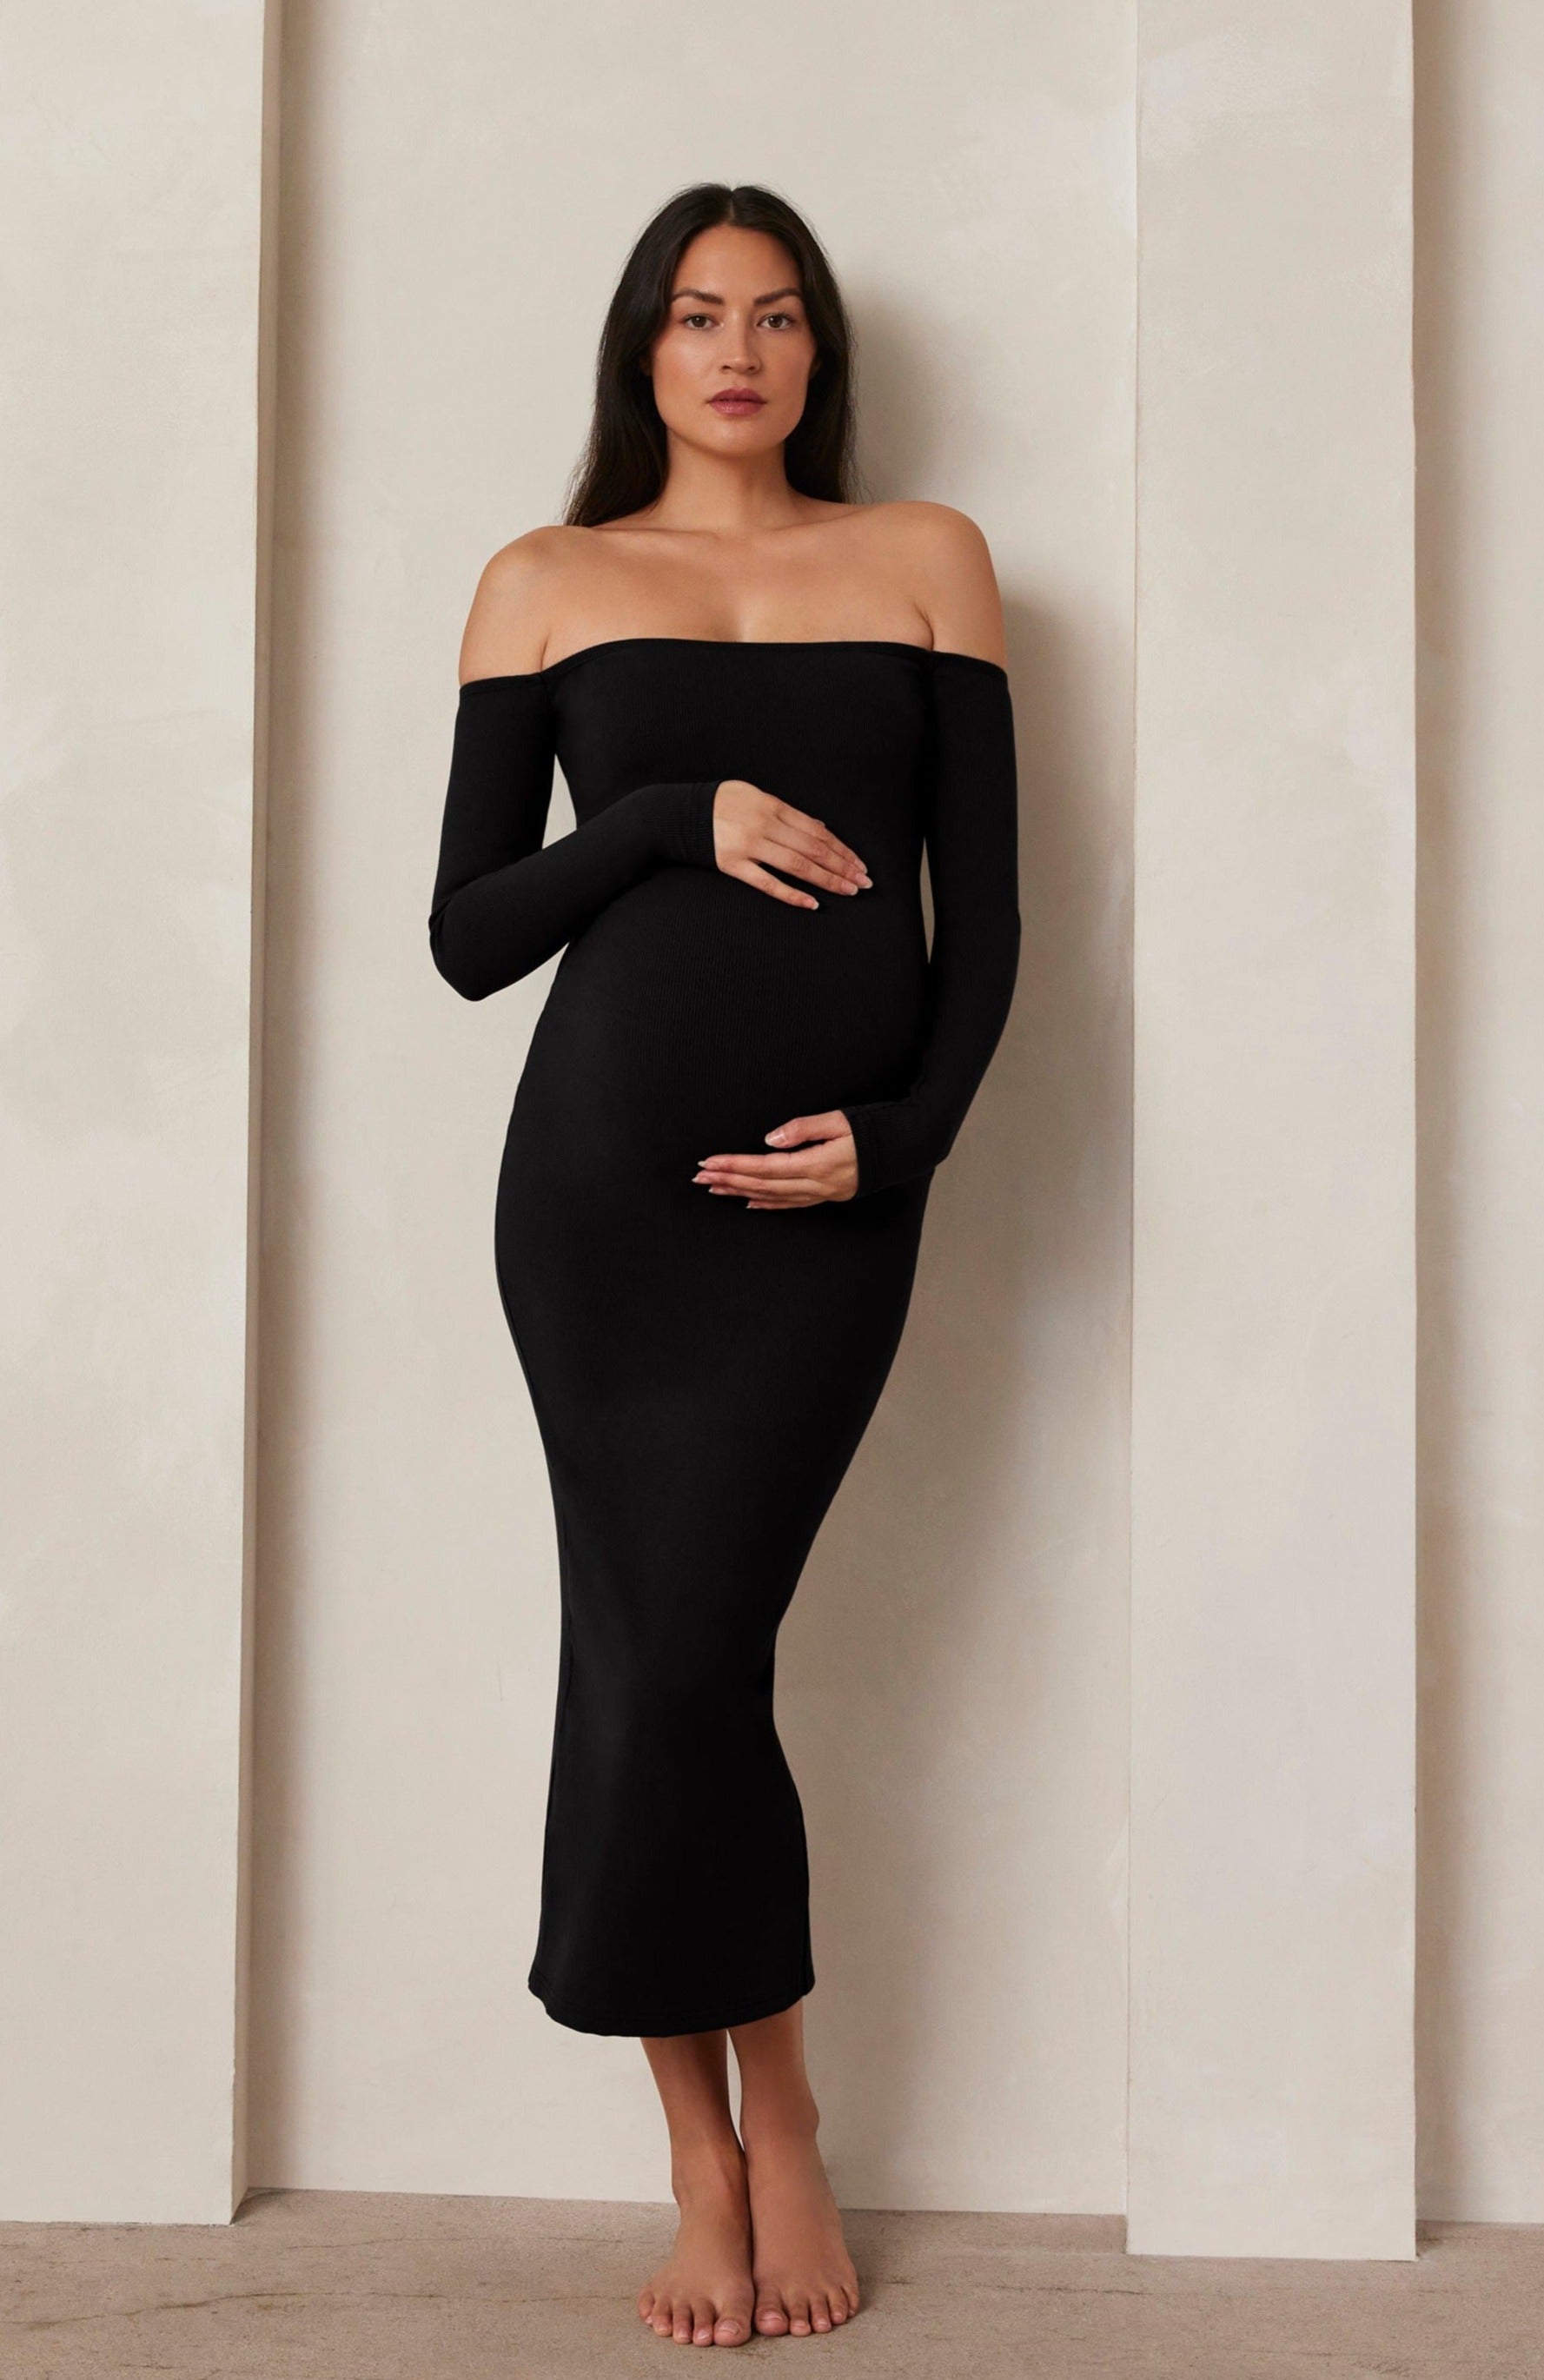 Ripe Maternity Off Shoulder Black Bodycon Maternity Dress | Like New - Size  X-Small